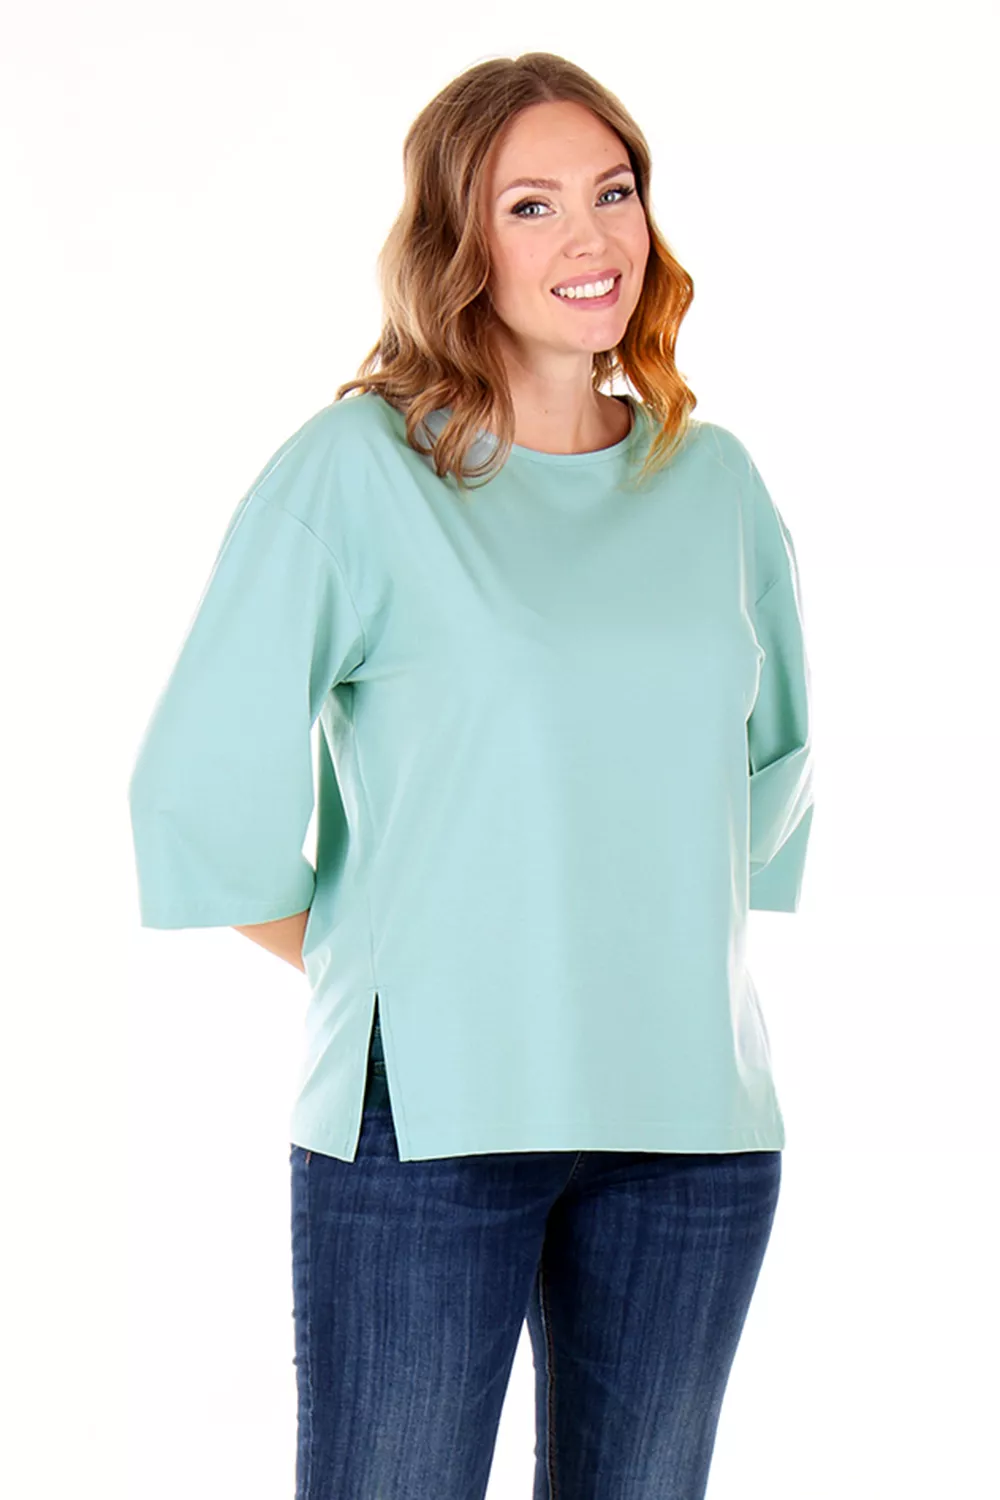 Блуза-футболка артикул 41-02 цвет 689